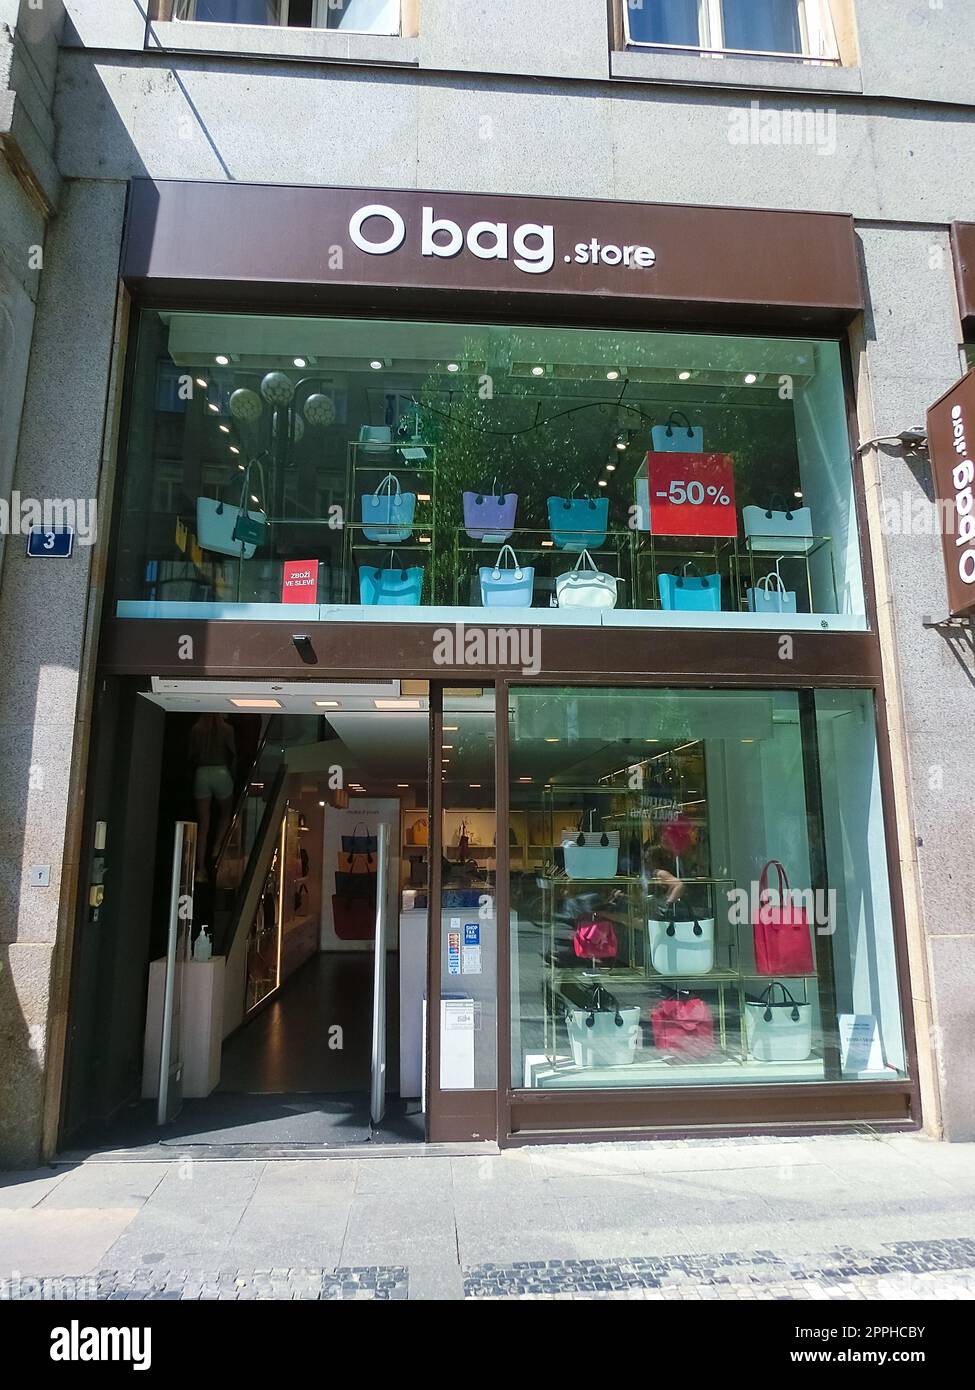 O bag store in Prague, Czech Republic Stock Photo